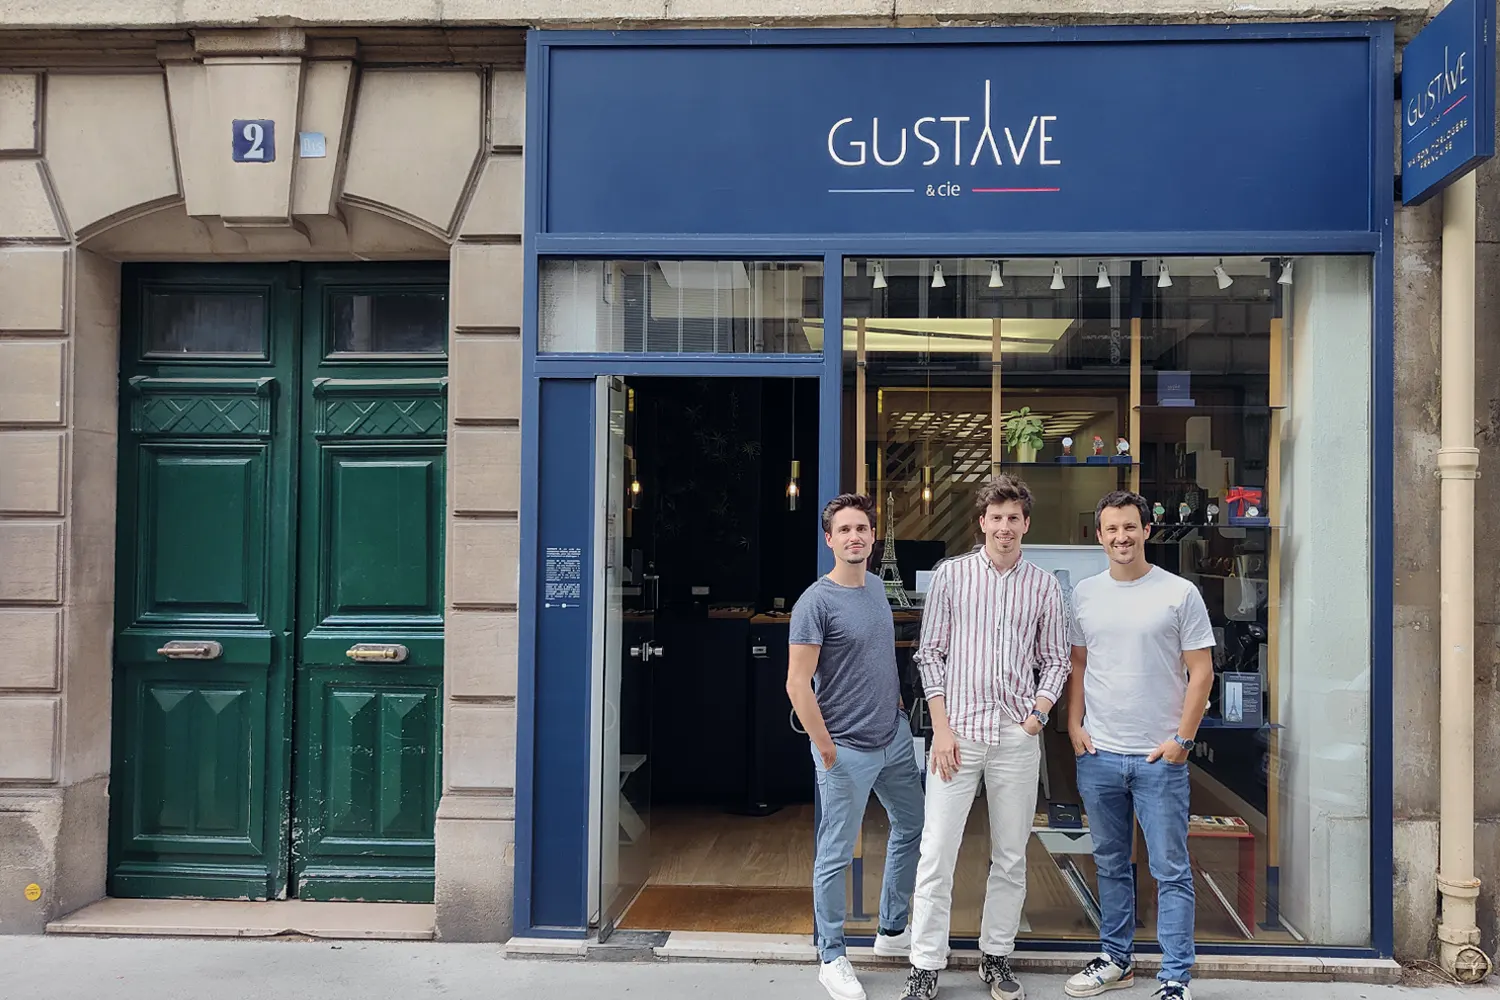 Banner Store Gustave & cie Paris